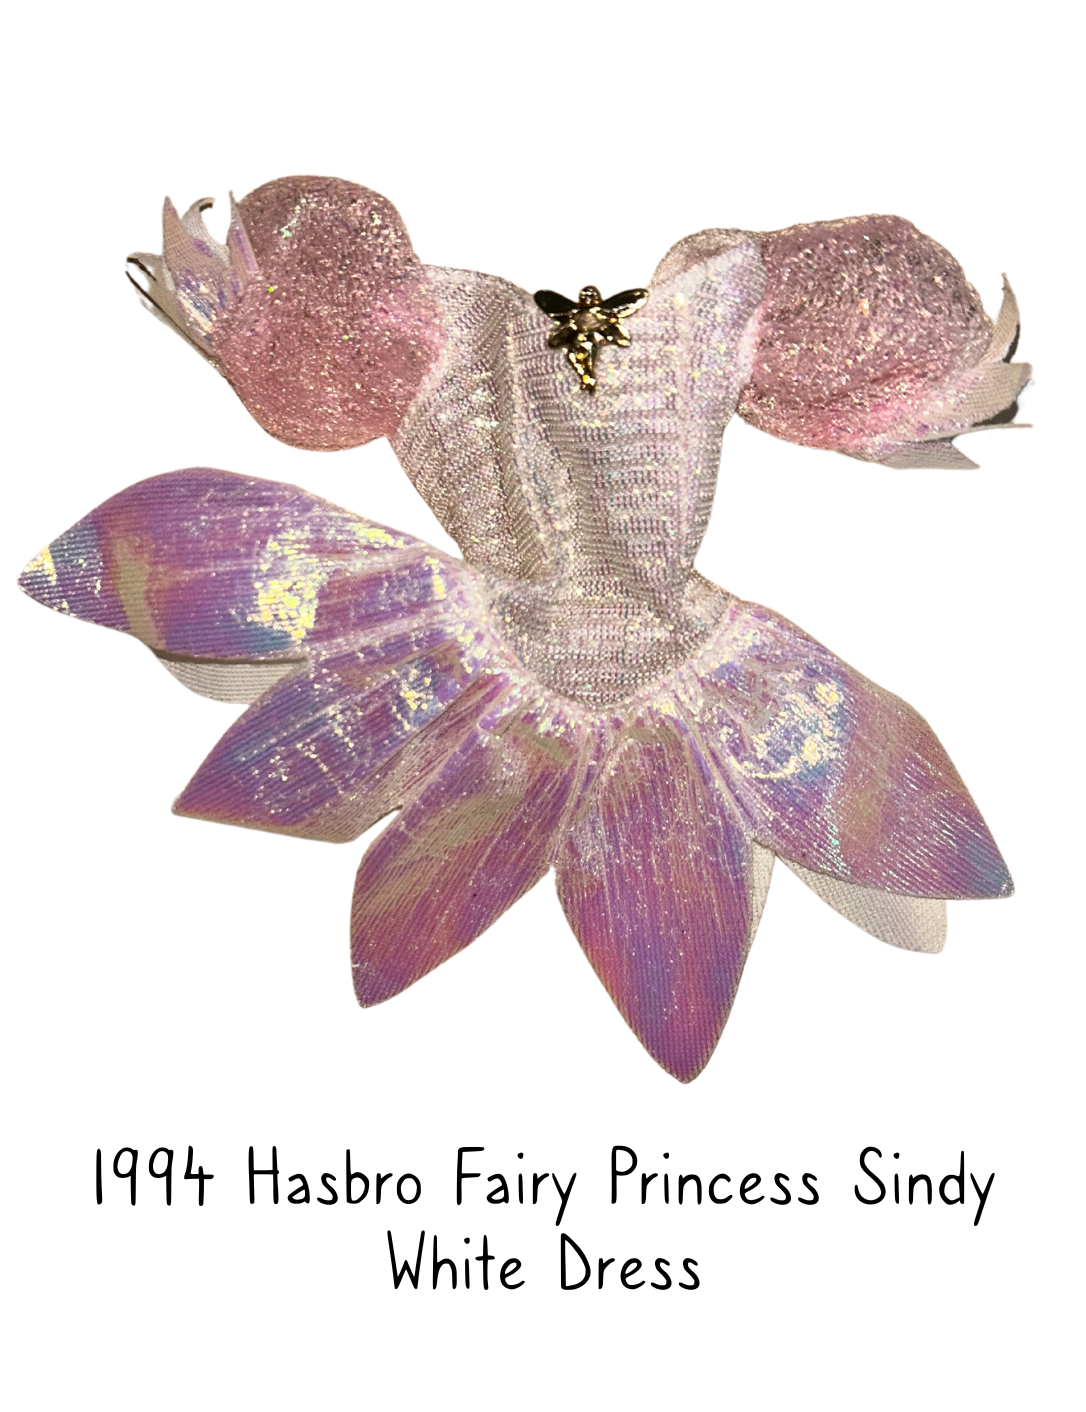 1994 Hasbro Fairy Princess Sindy White Dress